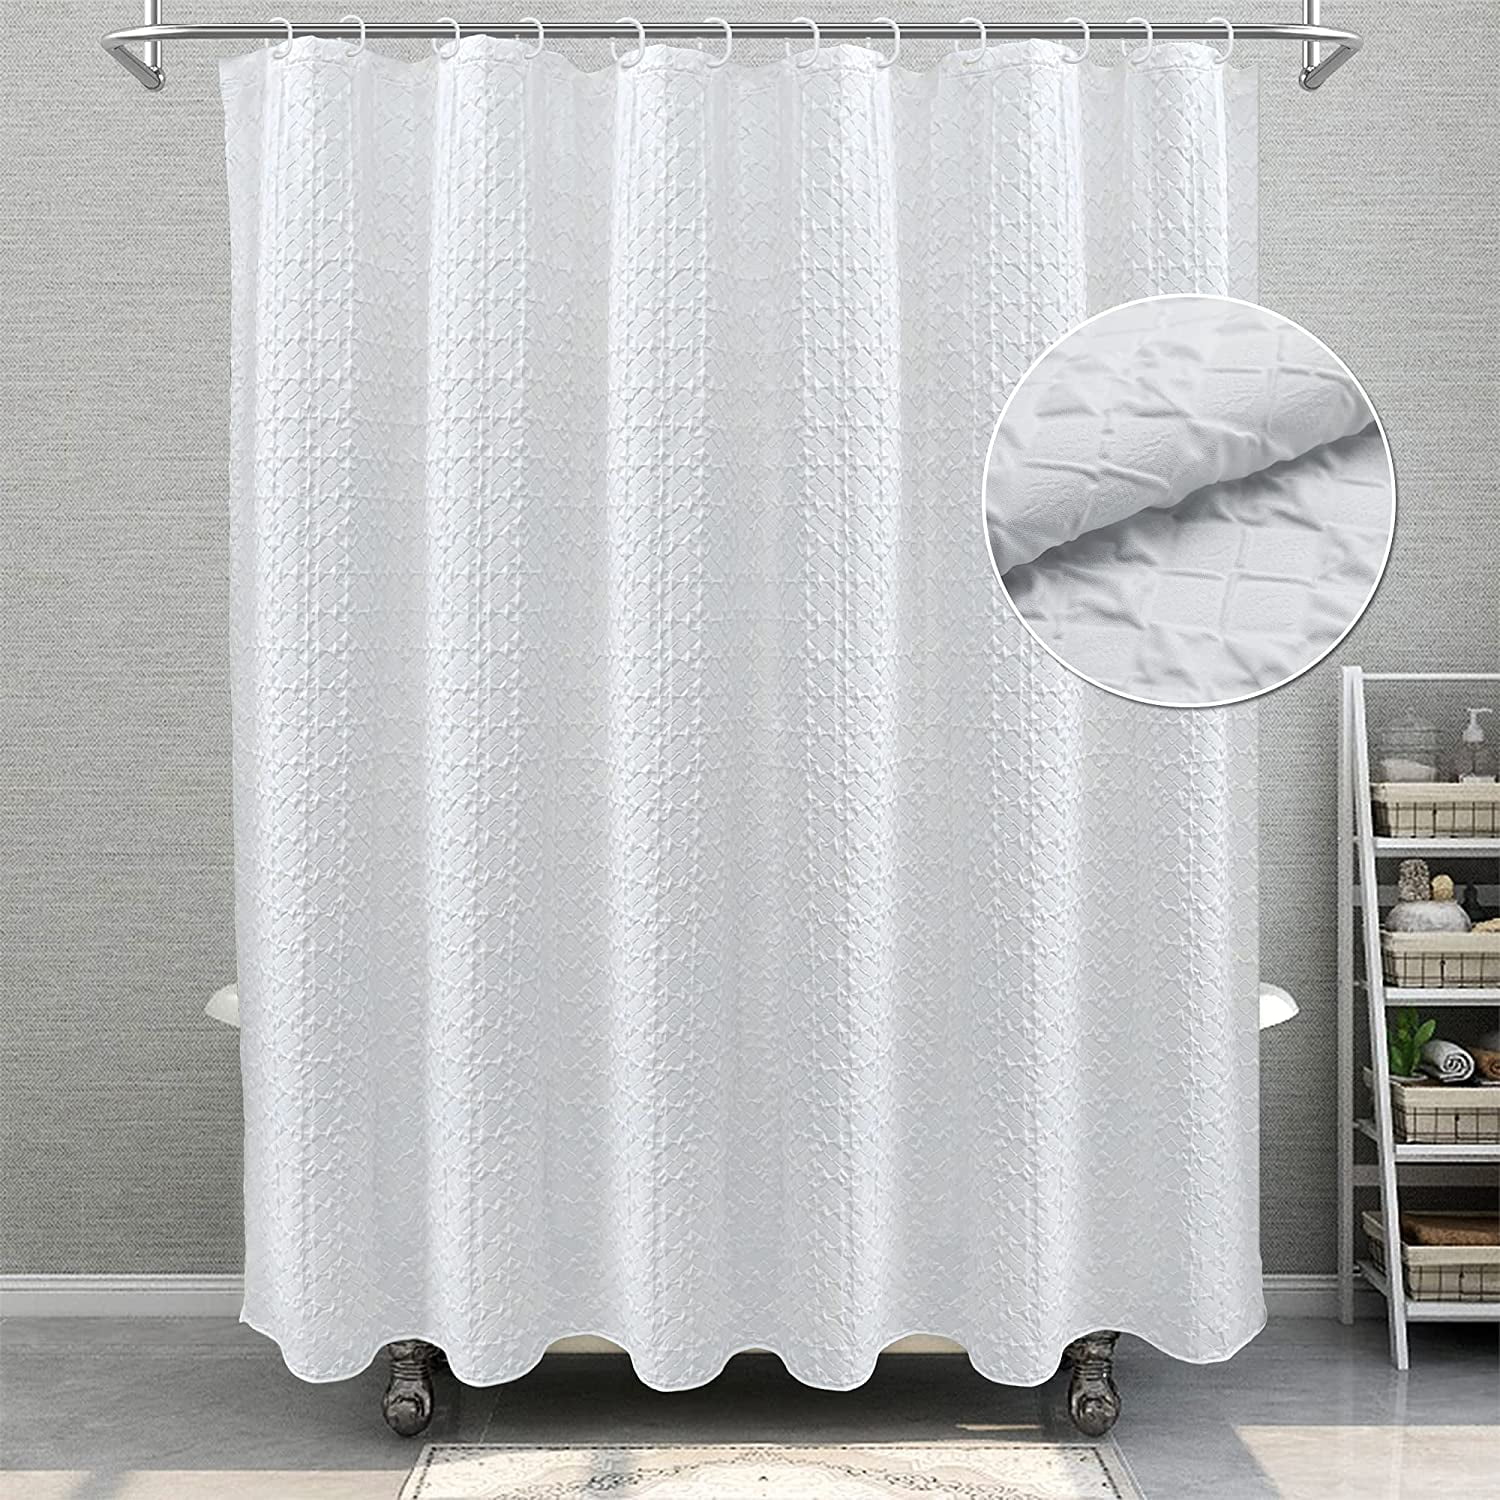 Shower Curtain Fabric Paris French Classic Black White 180x200 cm 